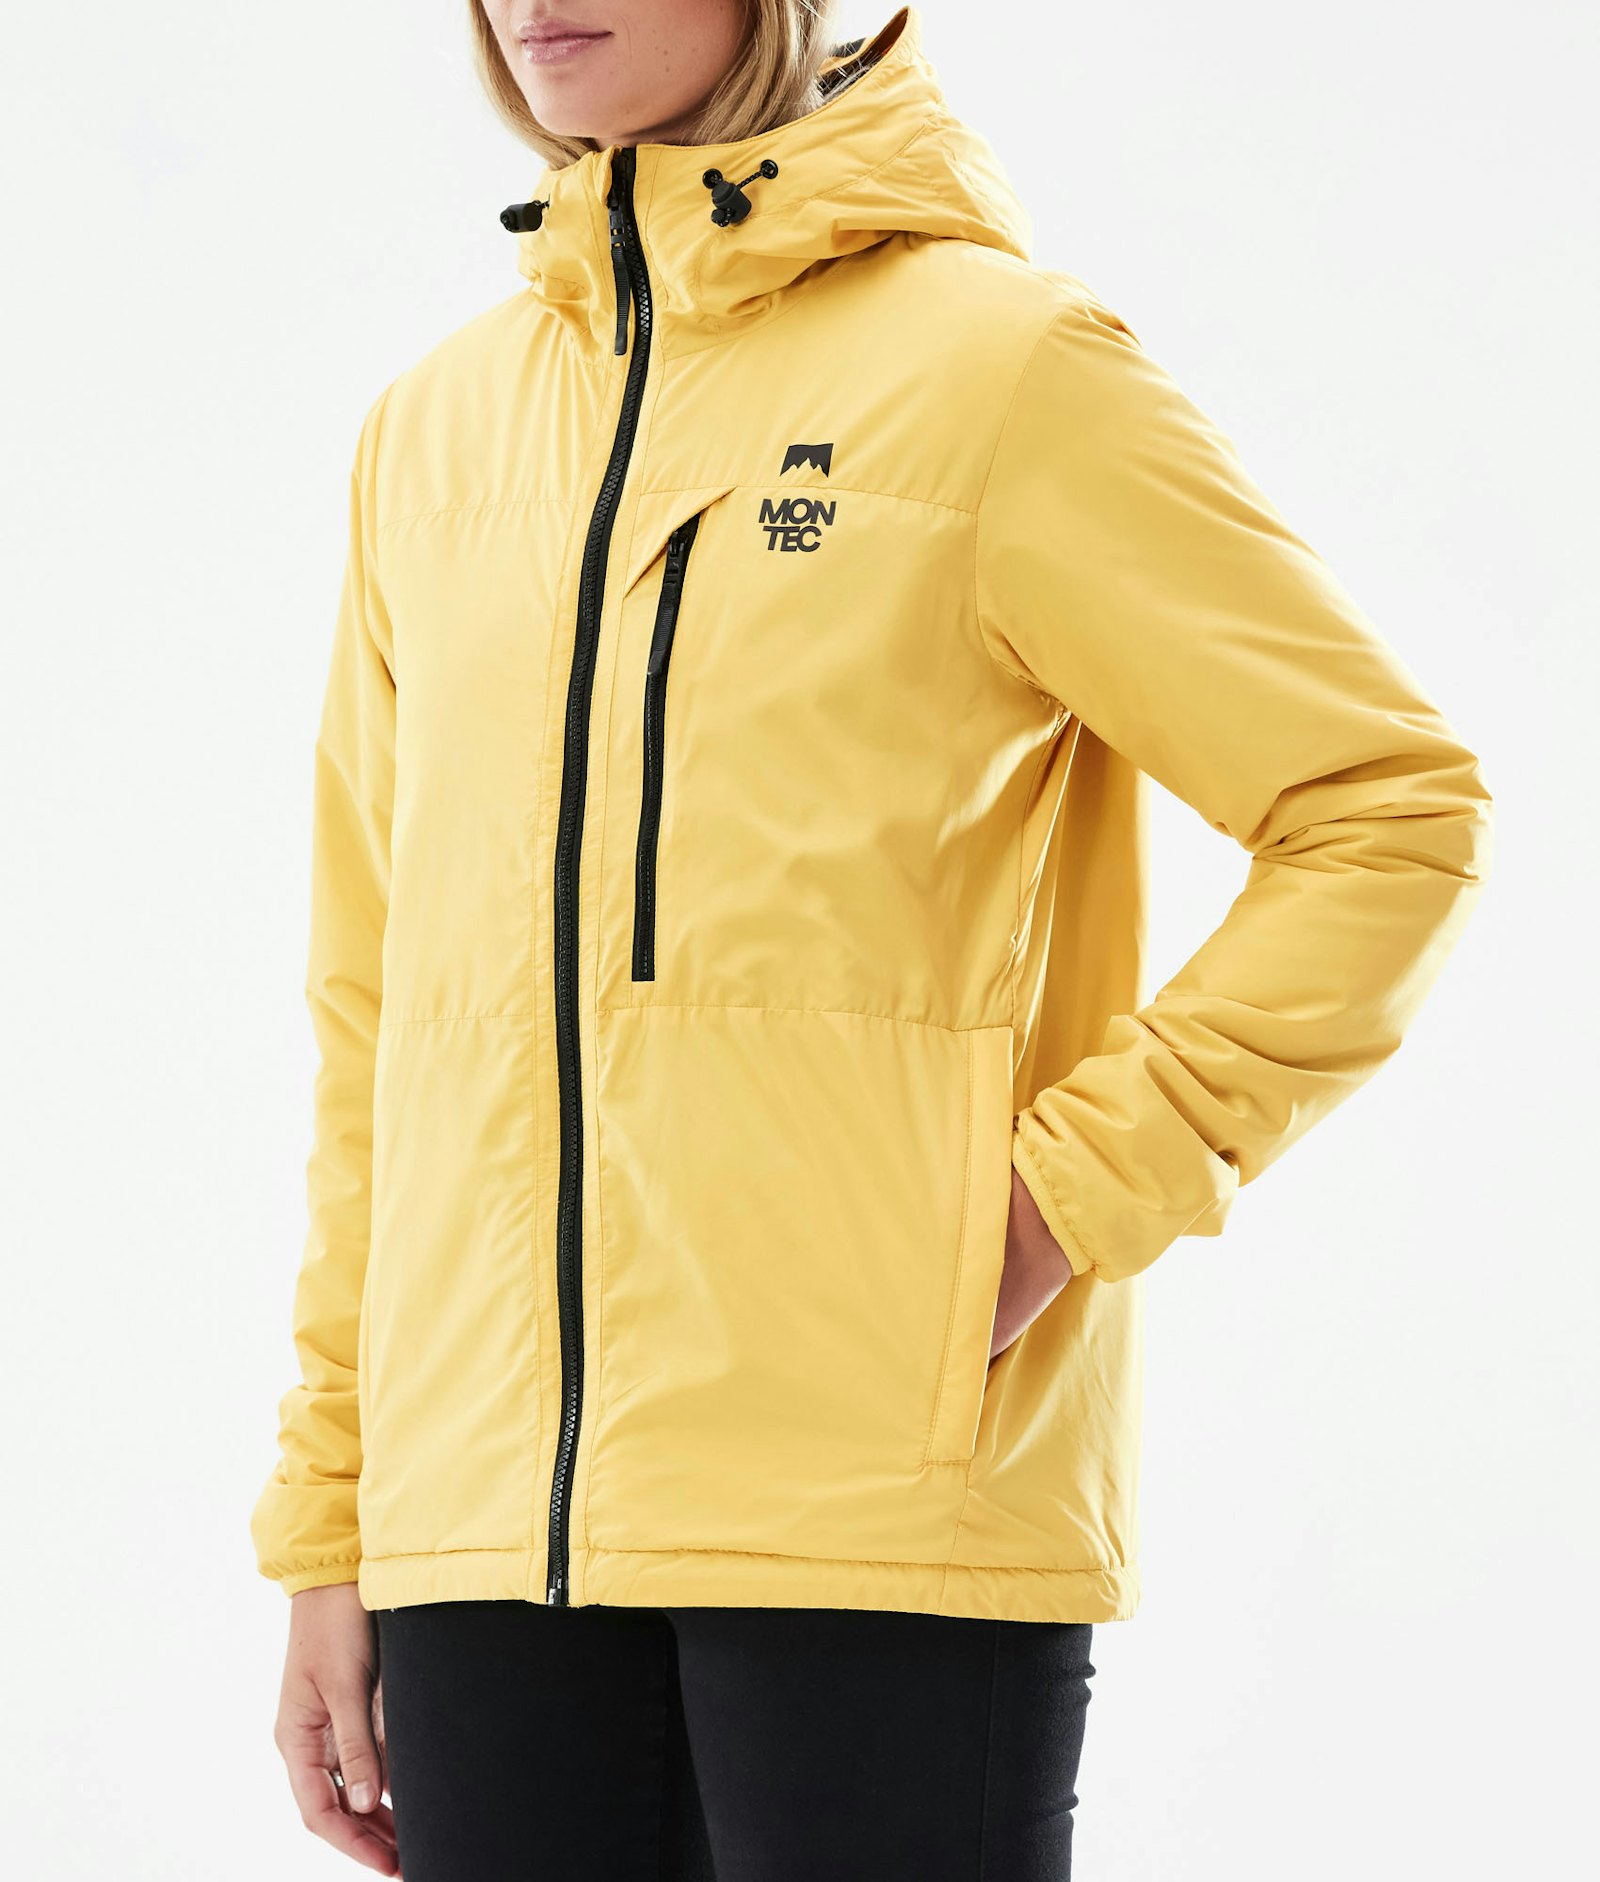 Montec Toasty W 2020 Midlayer Jacket Outdoor Women Yellow, Image 7 of 9